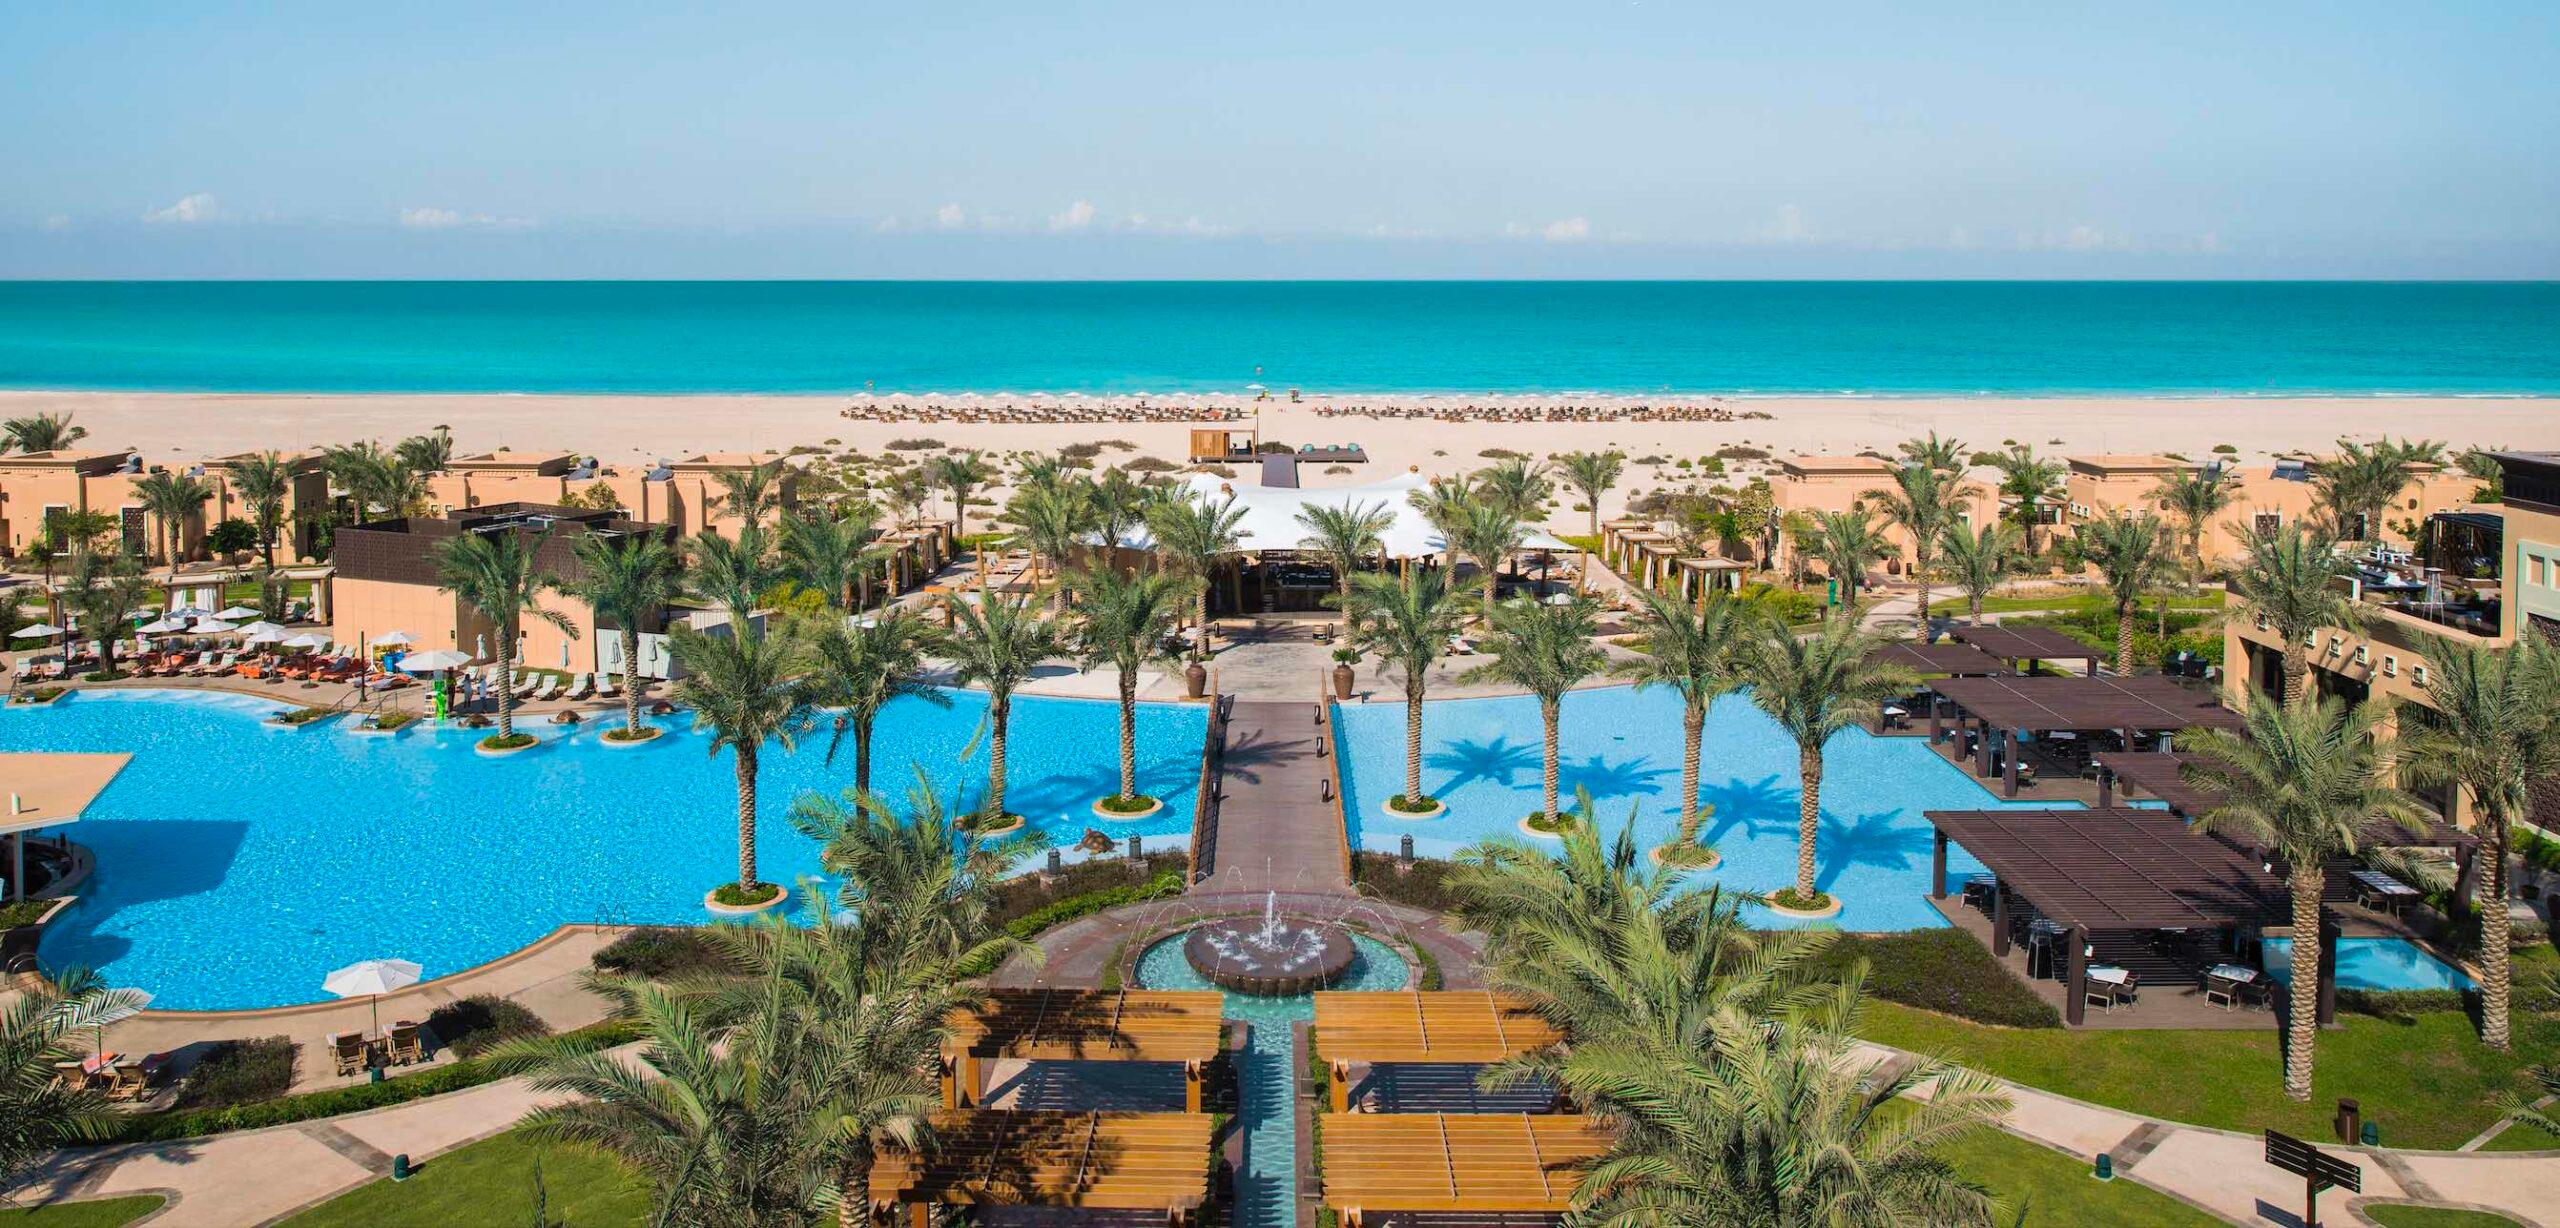 This Saadiyat Resort has a fantastic offer for UAE residents